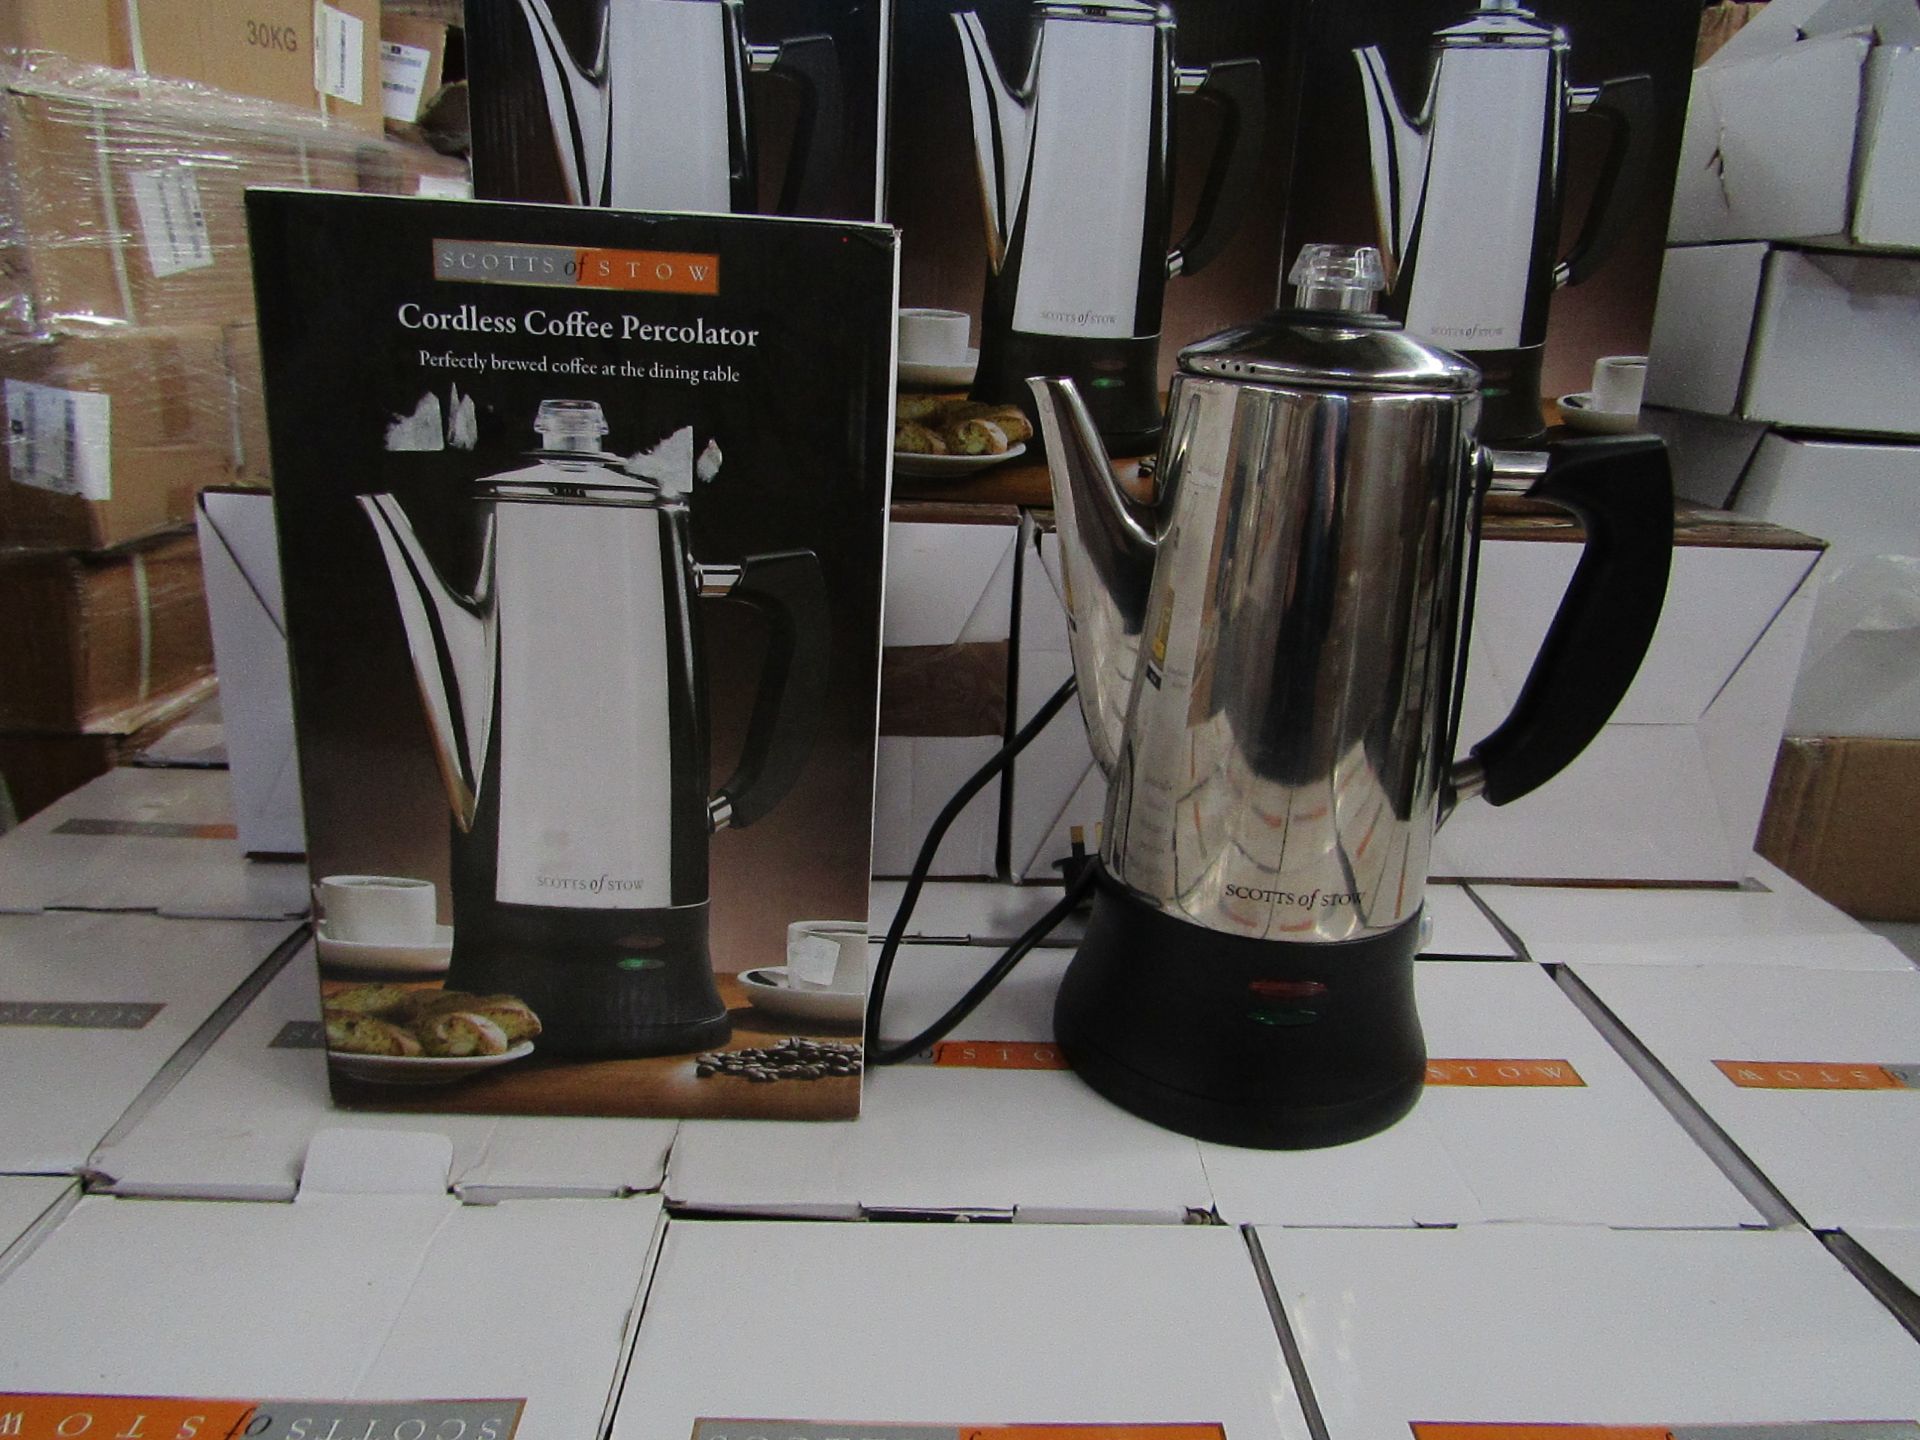 1 x Scotts of Stow Cordless Electric Coffee Percolator RRP £59.95 SKU SCO-DIR-3142703 TOTAL RRP £